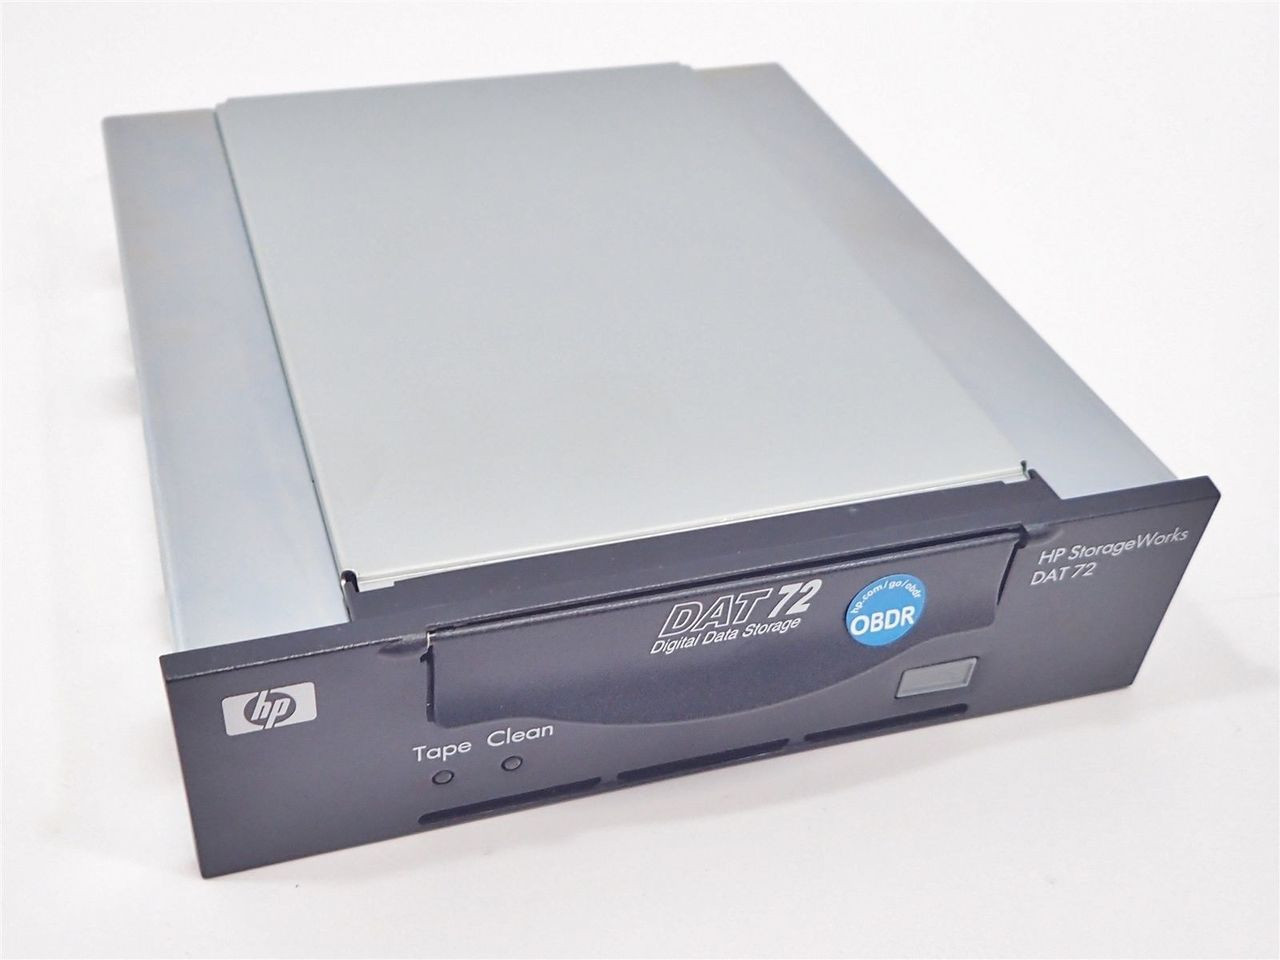 HPE StorageWorks 393484-001 36GB/72GB LVD DAT 72 Ultra SCSI Tape